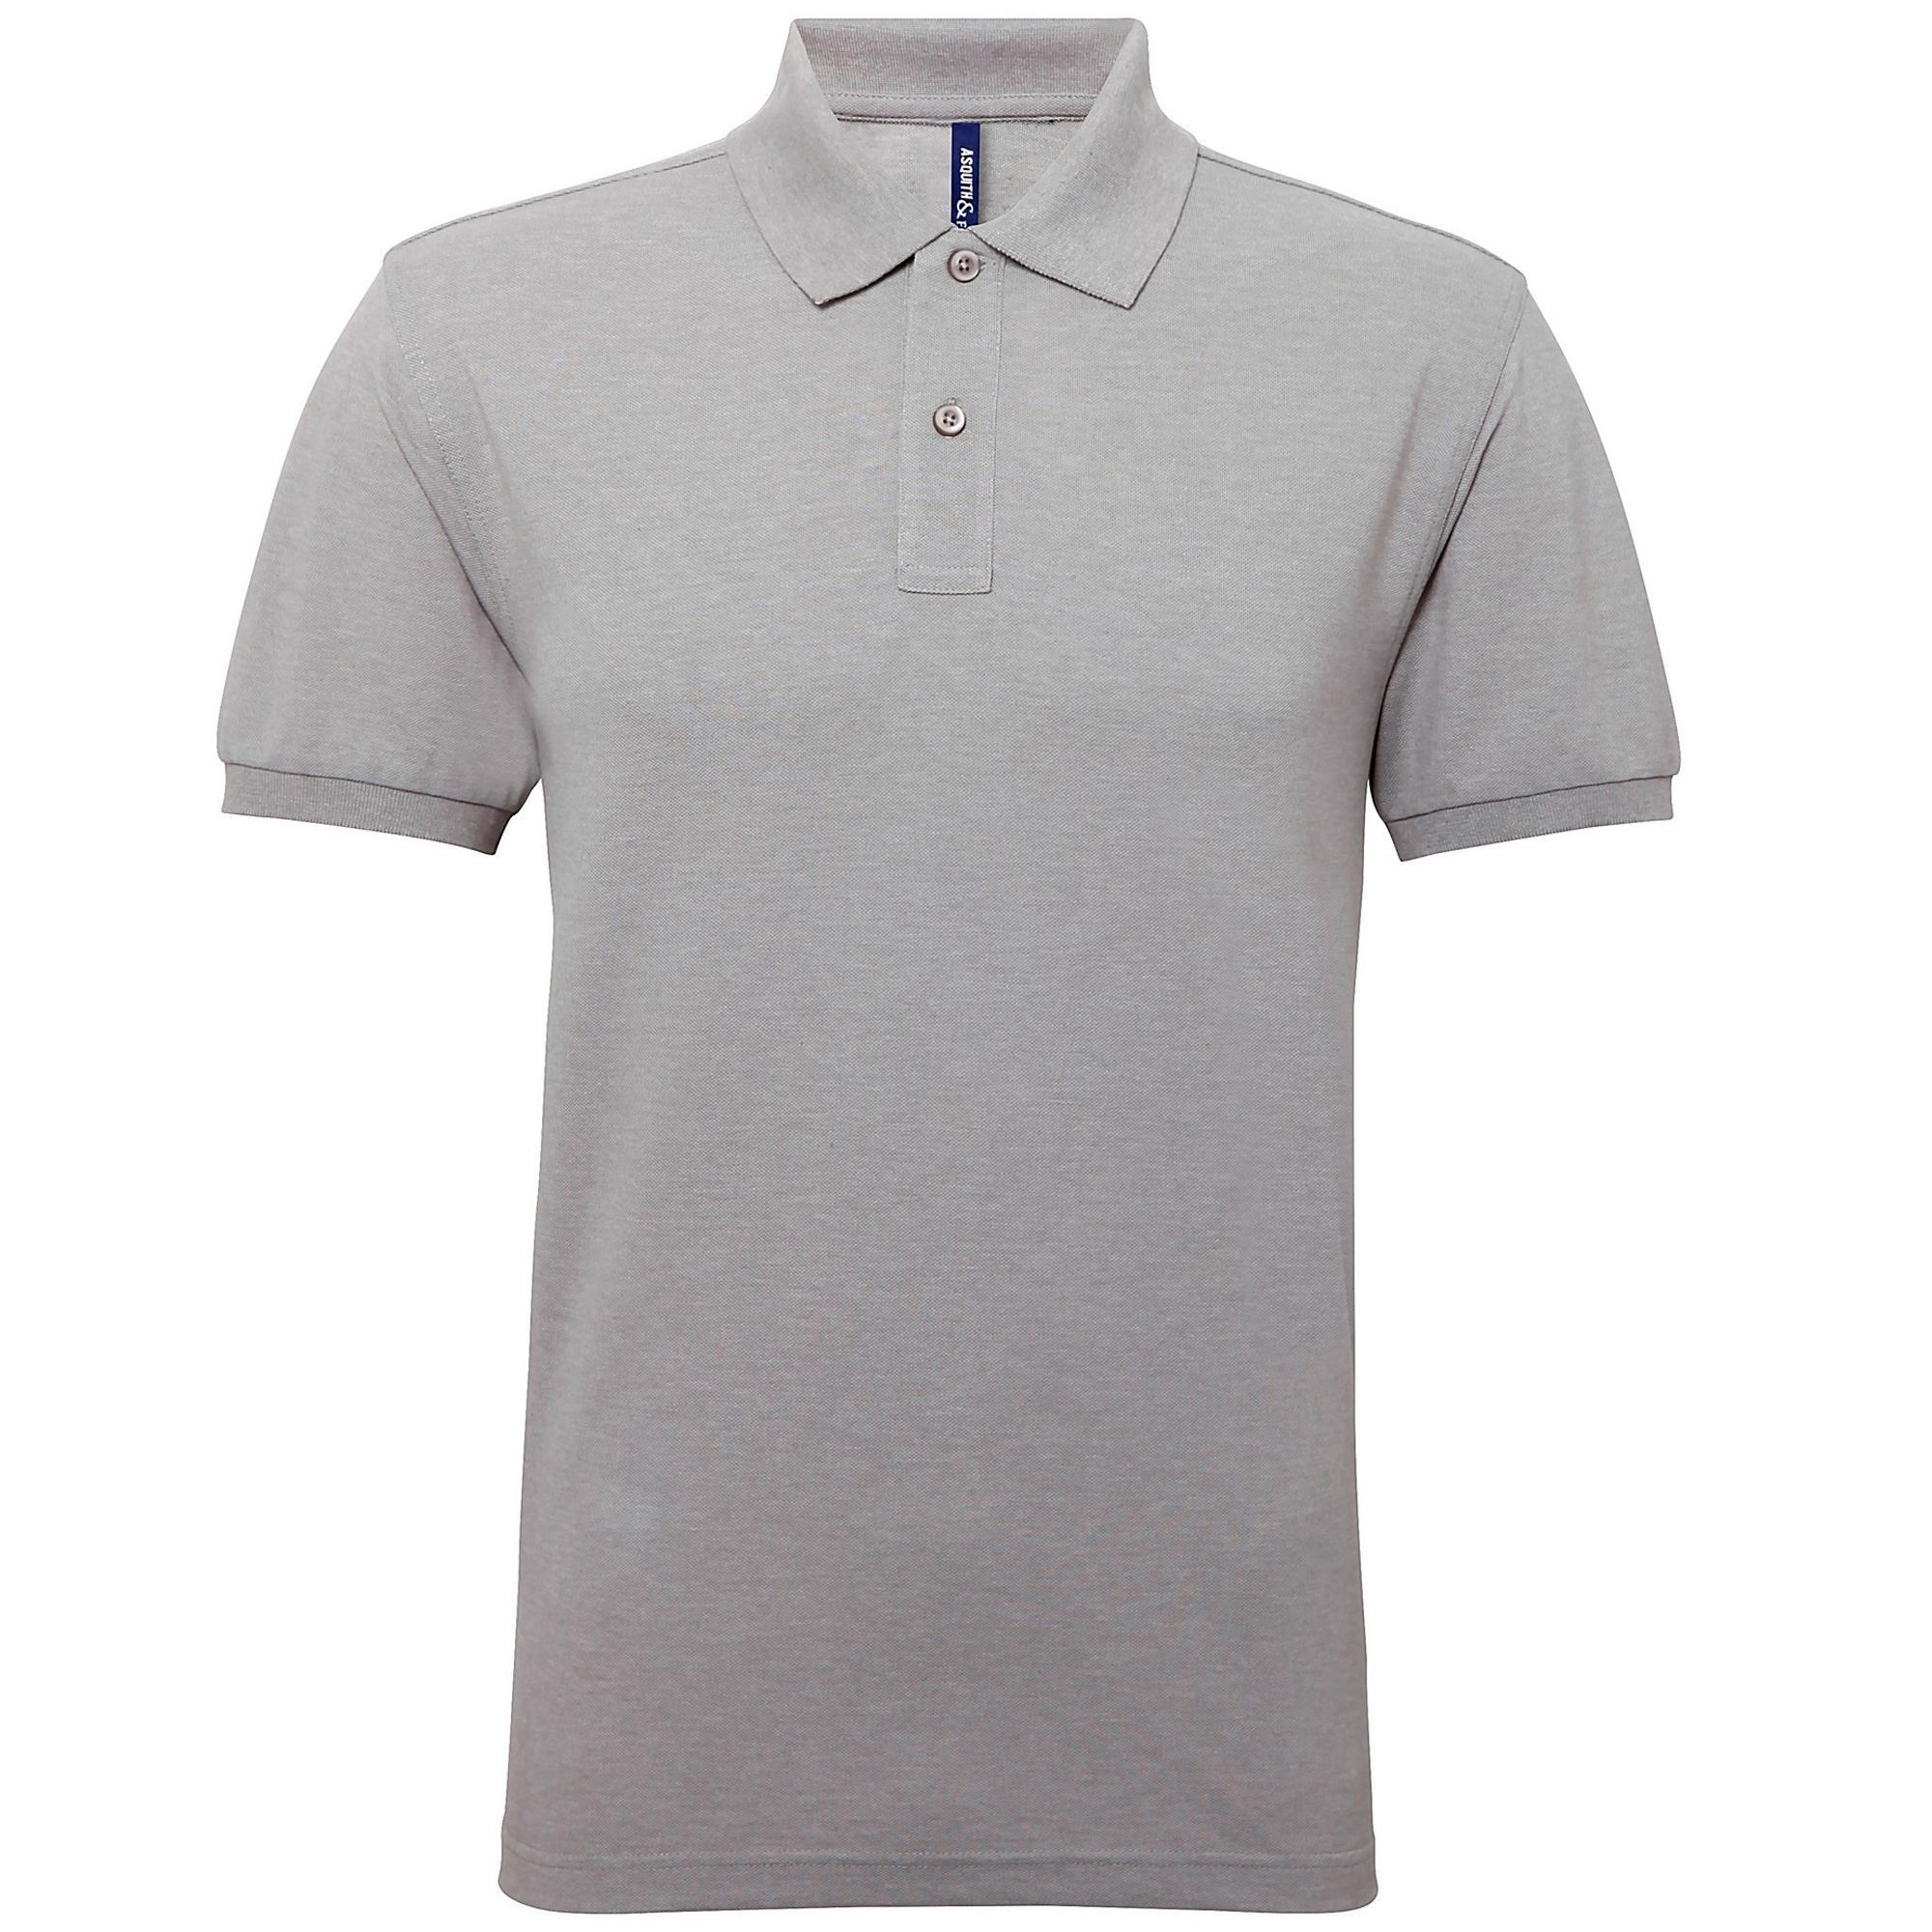 Asquith & Fox Mens Short Sleeve Performance Blend Polo Shirt (Heather Grey) (5XL)